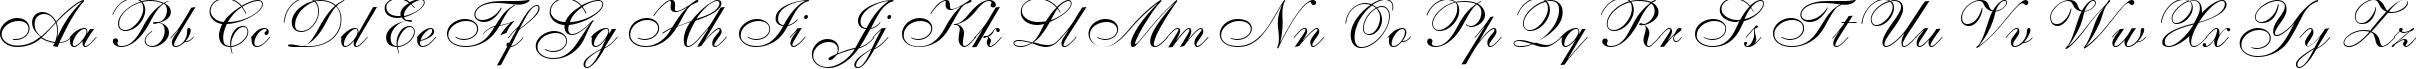 Пример написания английского алфавита шрифтом Allegretto Script One